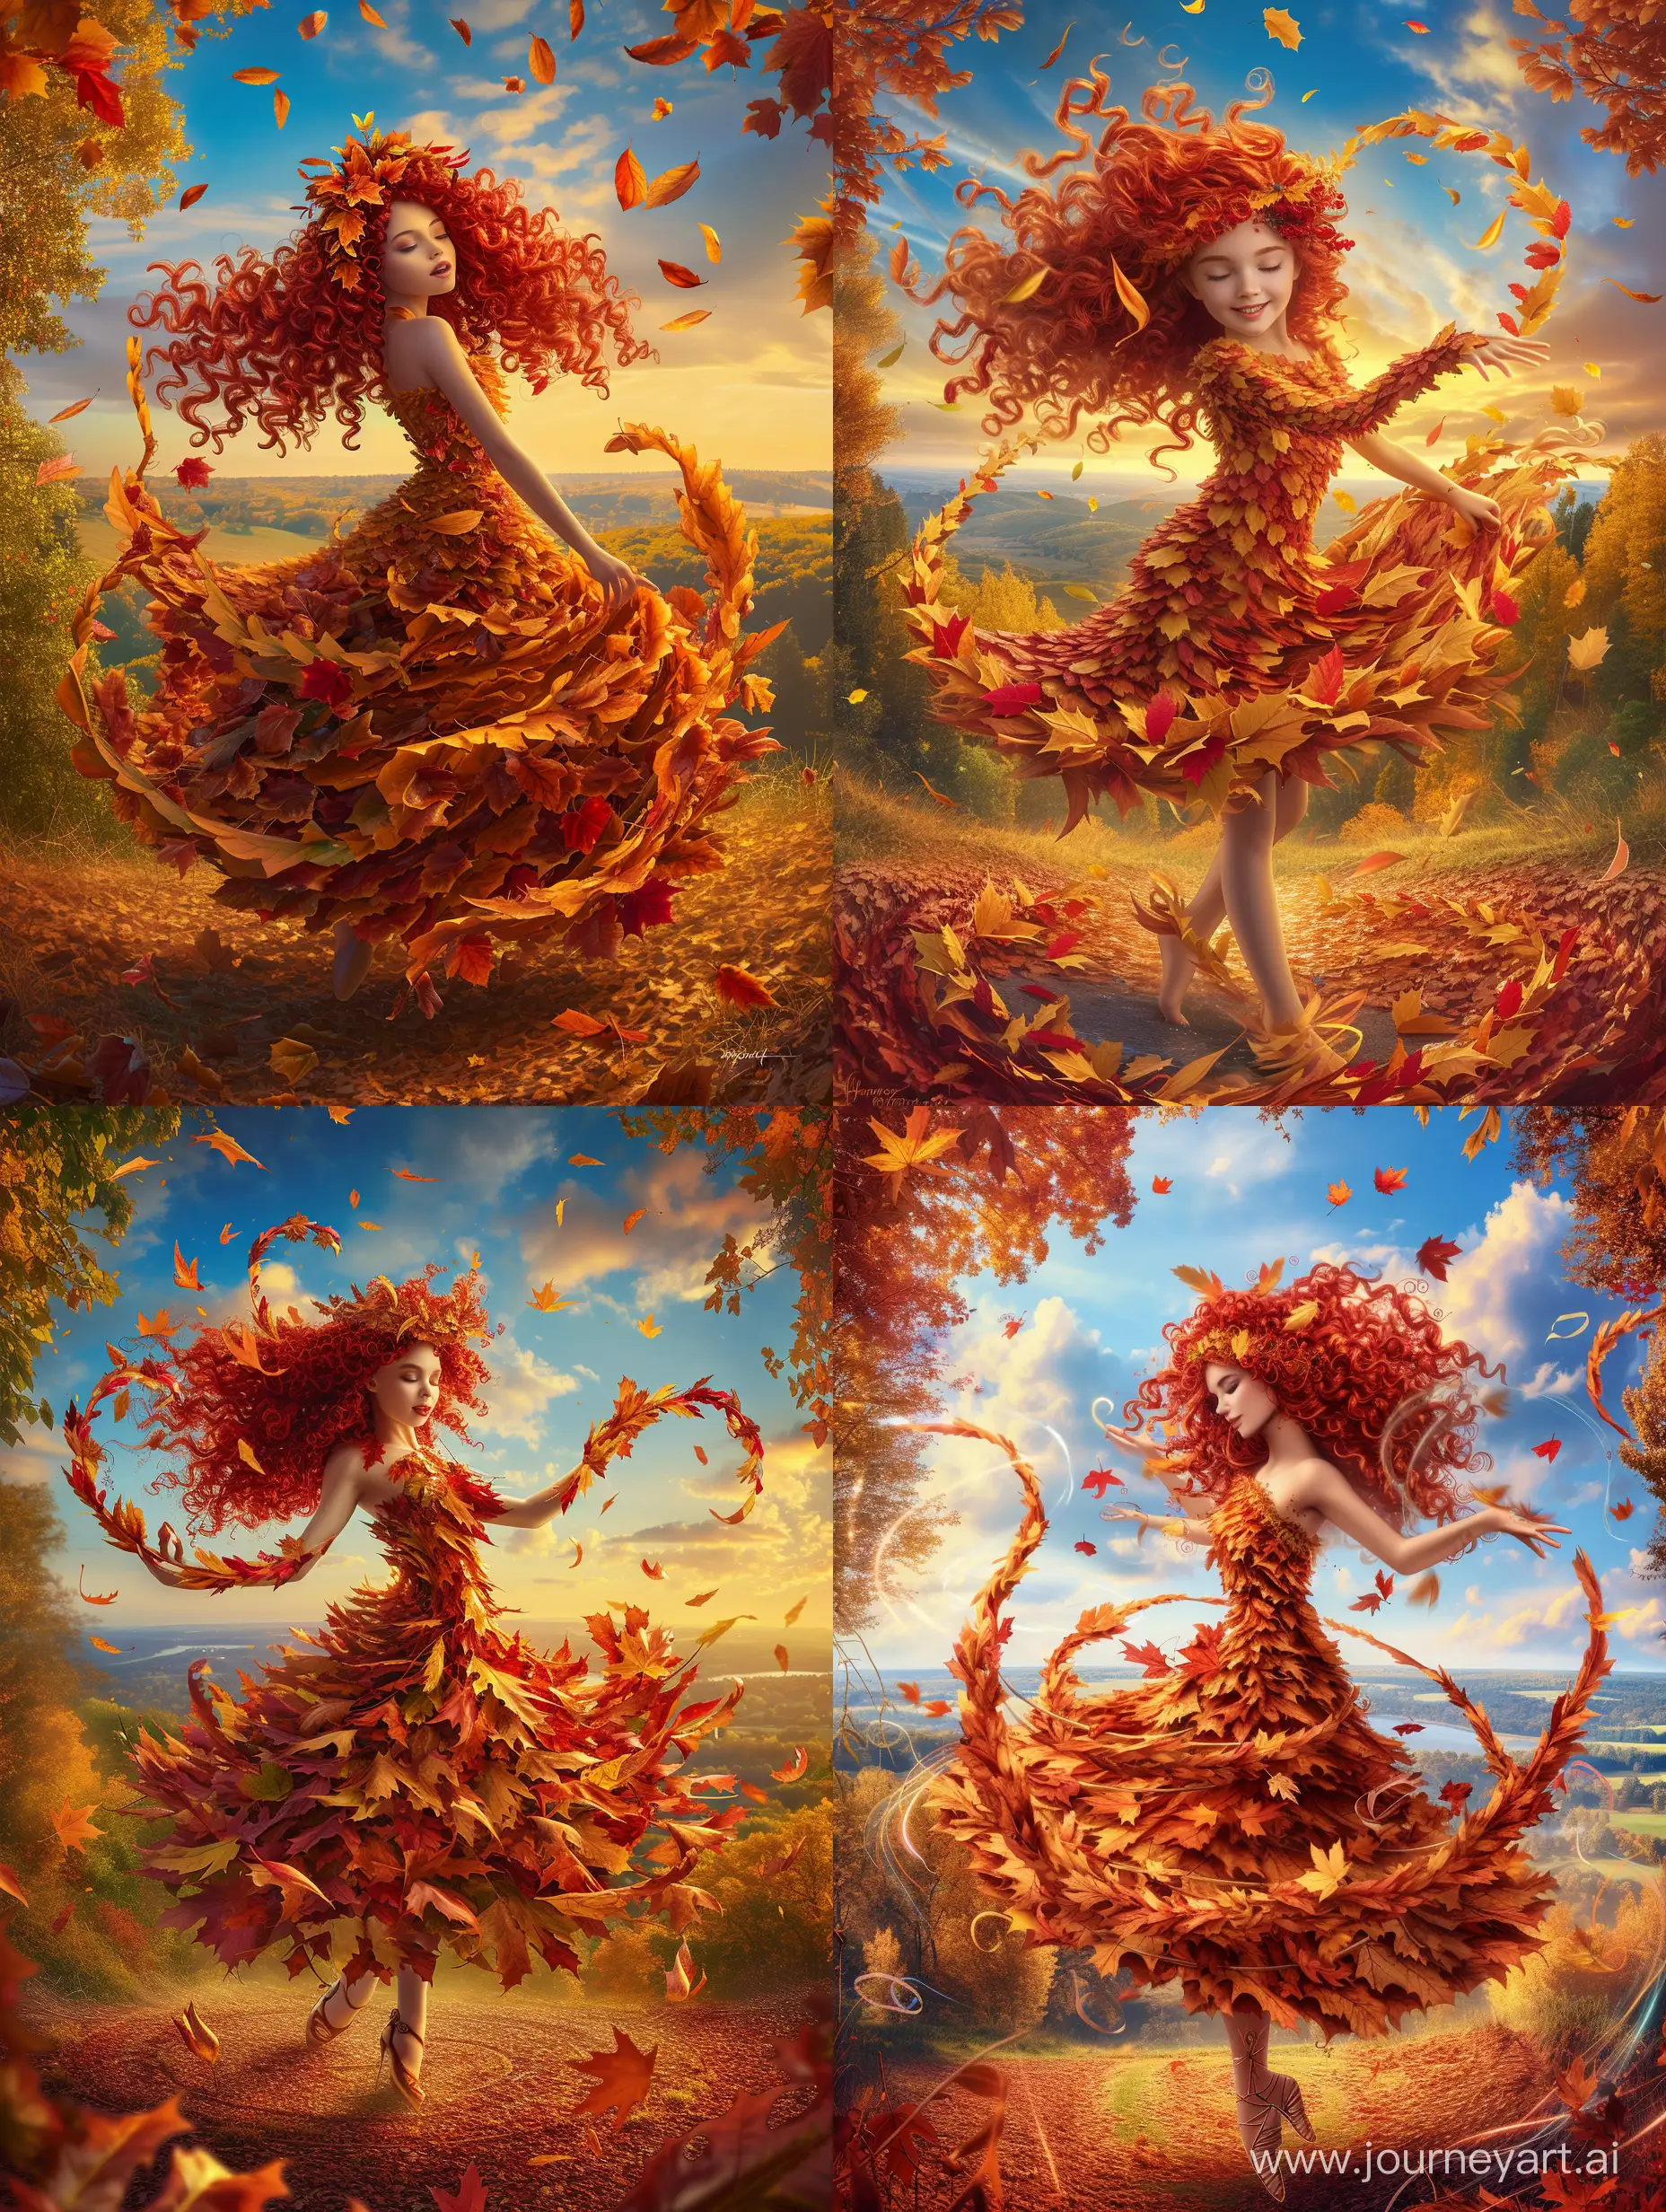 Enchanting-Autumn-Queen-Dancing-in-a-Forest-Wonderland